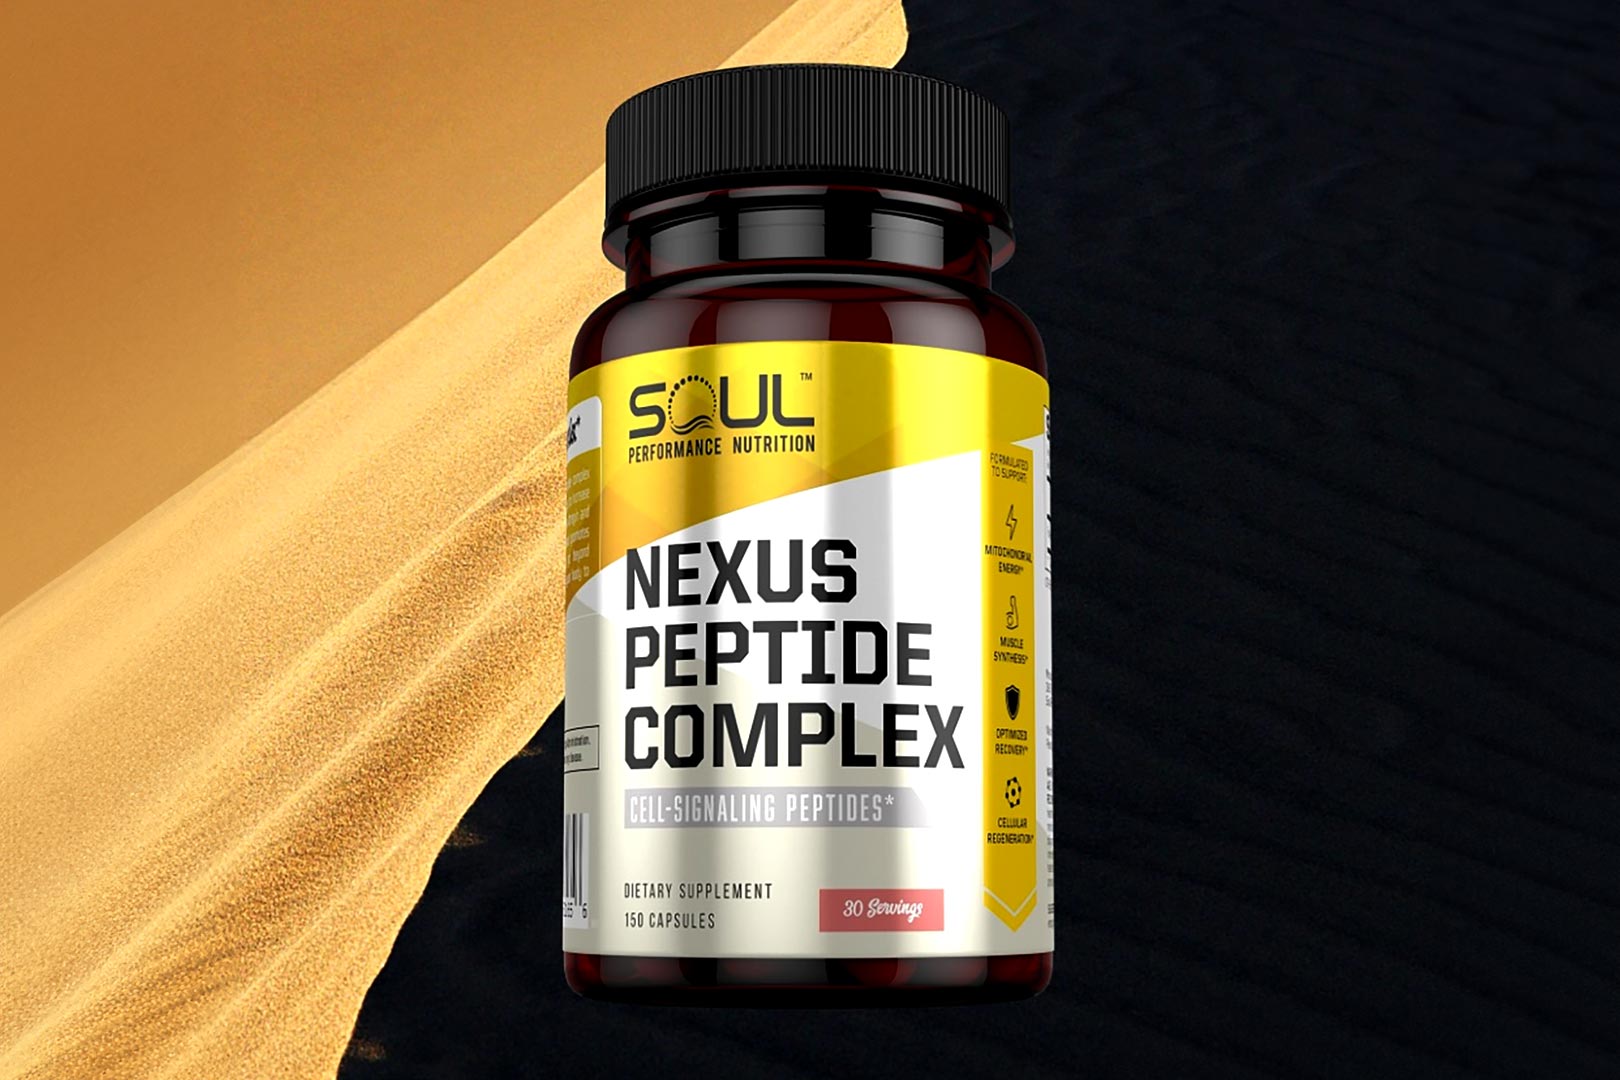 Soul Performance Nutrition Nexus Peptide Complex Unveiled